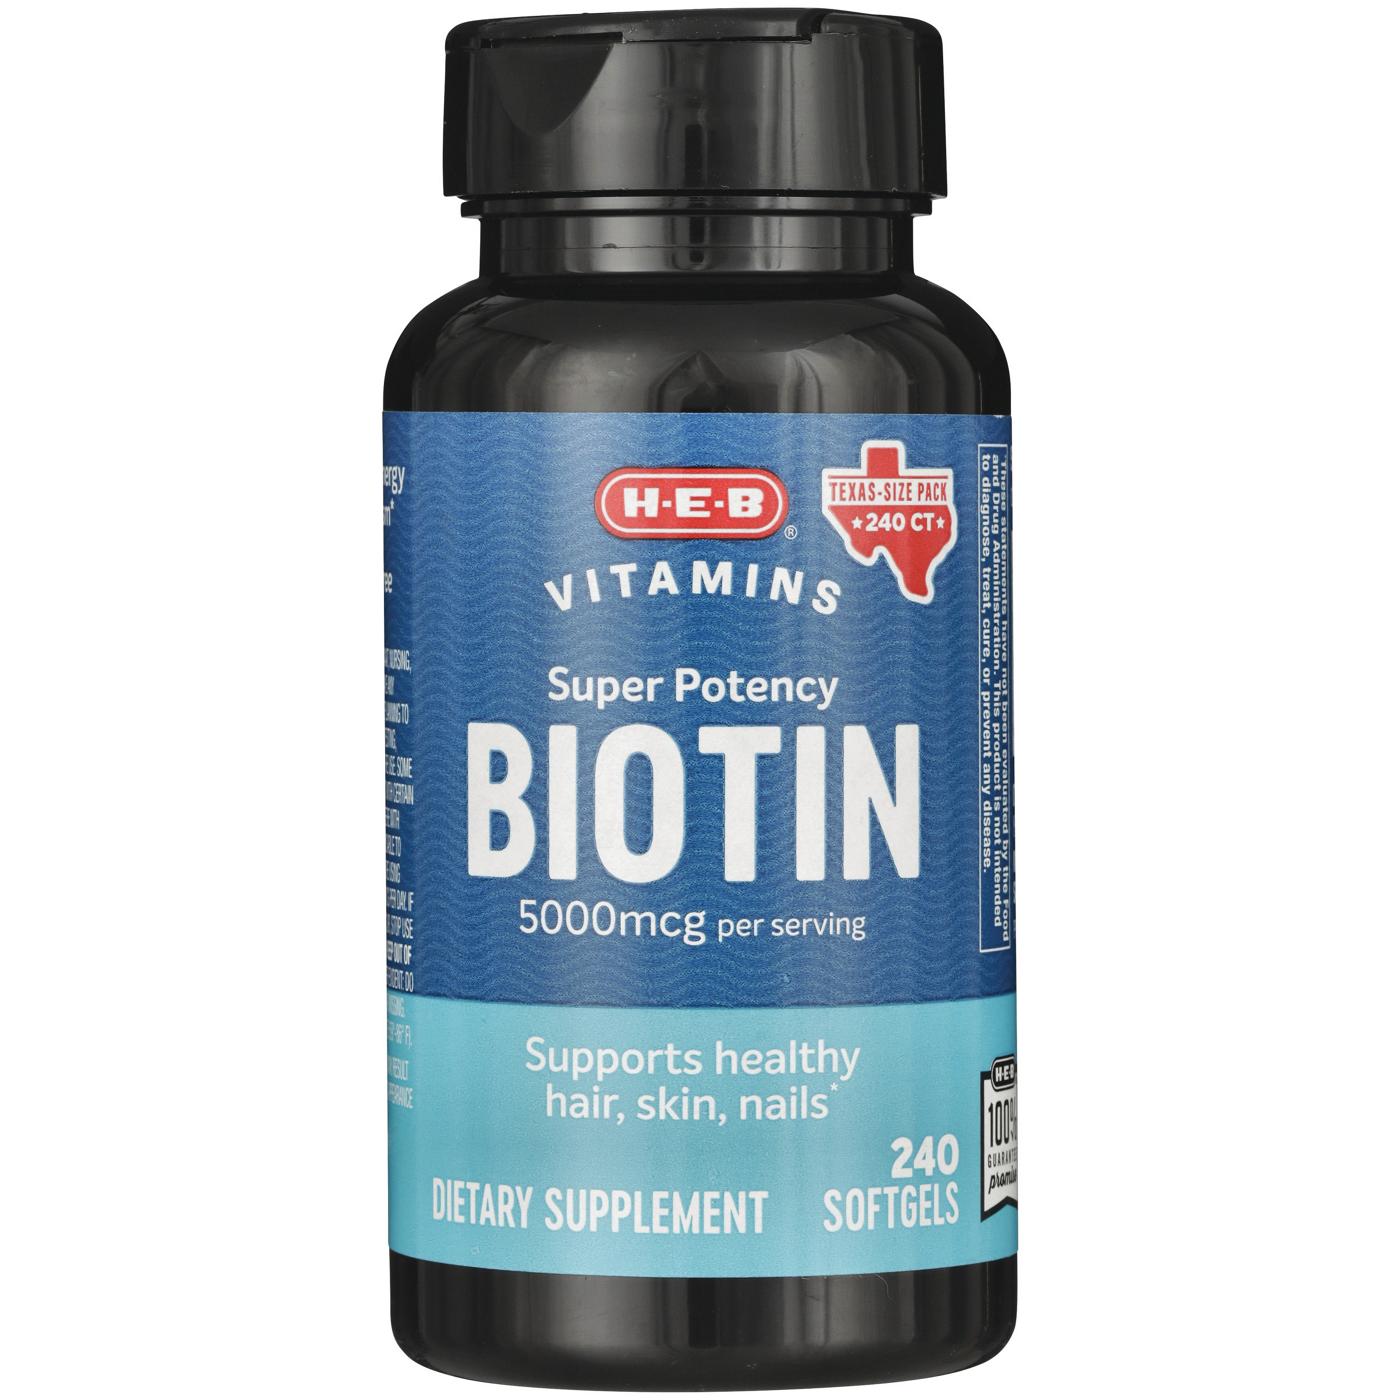 H-E-B Vitamins Super Potency 5,000 mcg Biotin Softgels - Texas-Size Pack; image 1 of 2